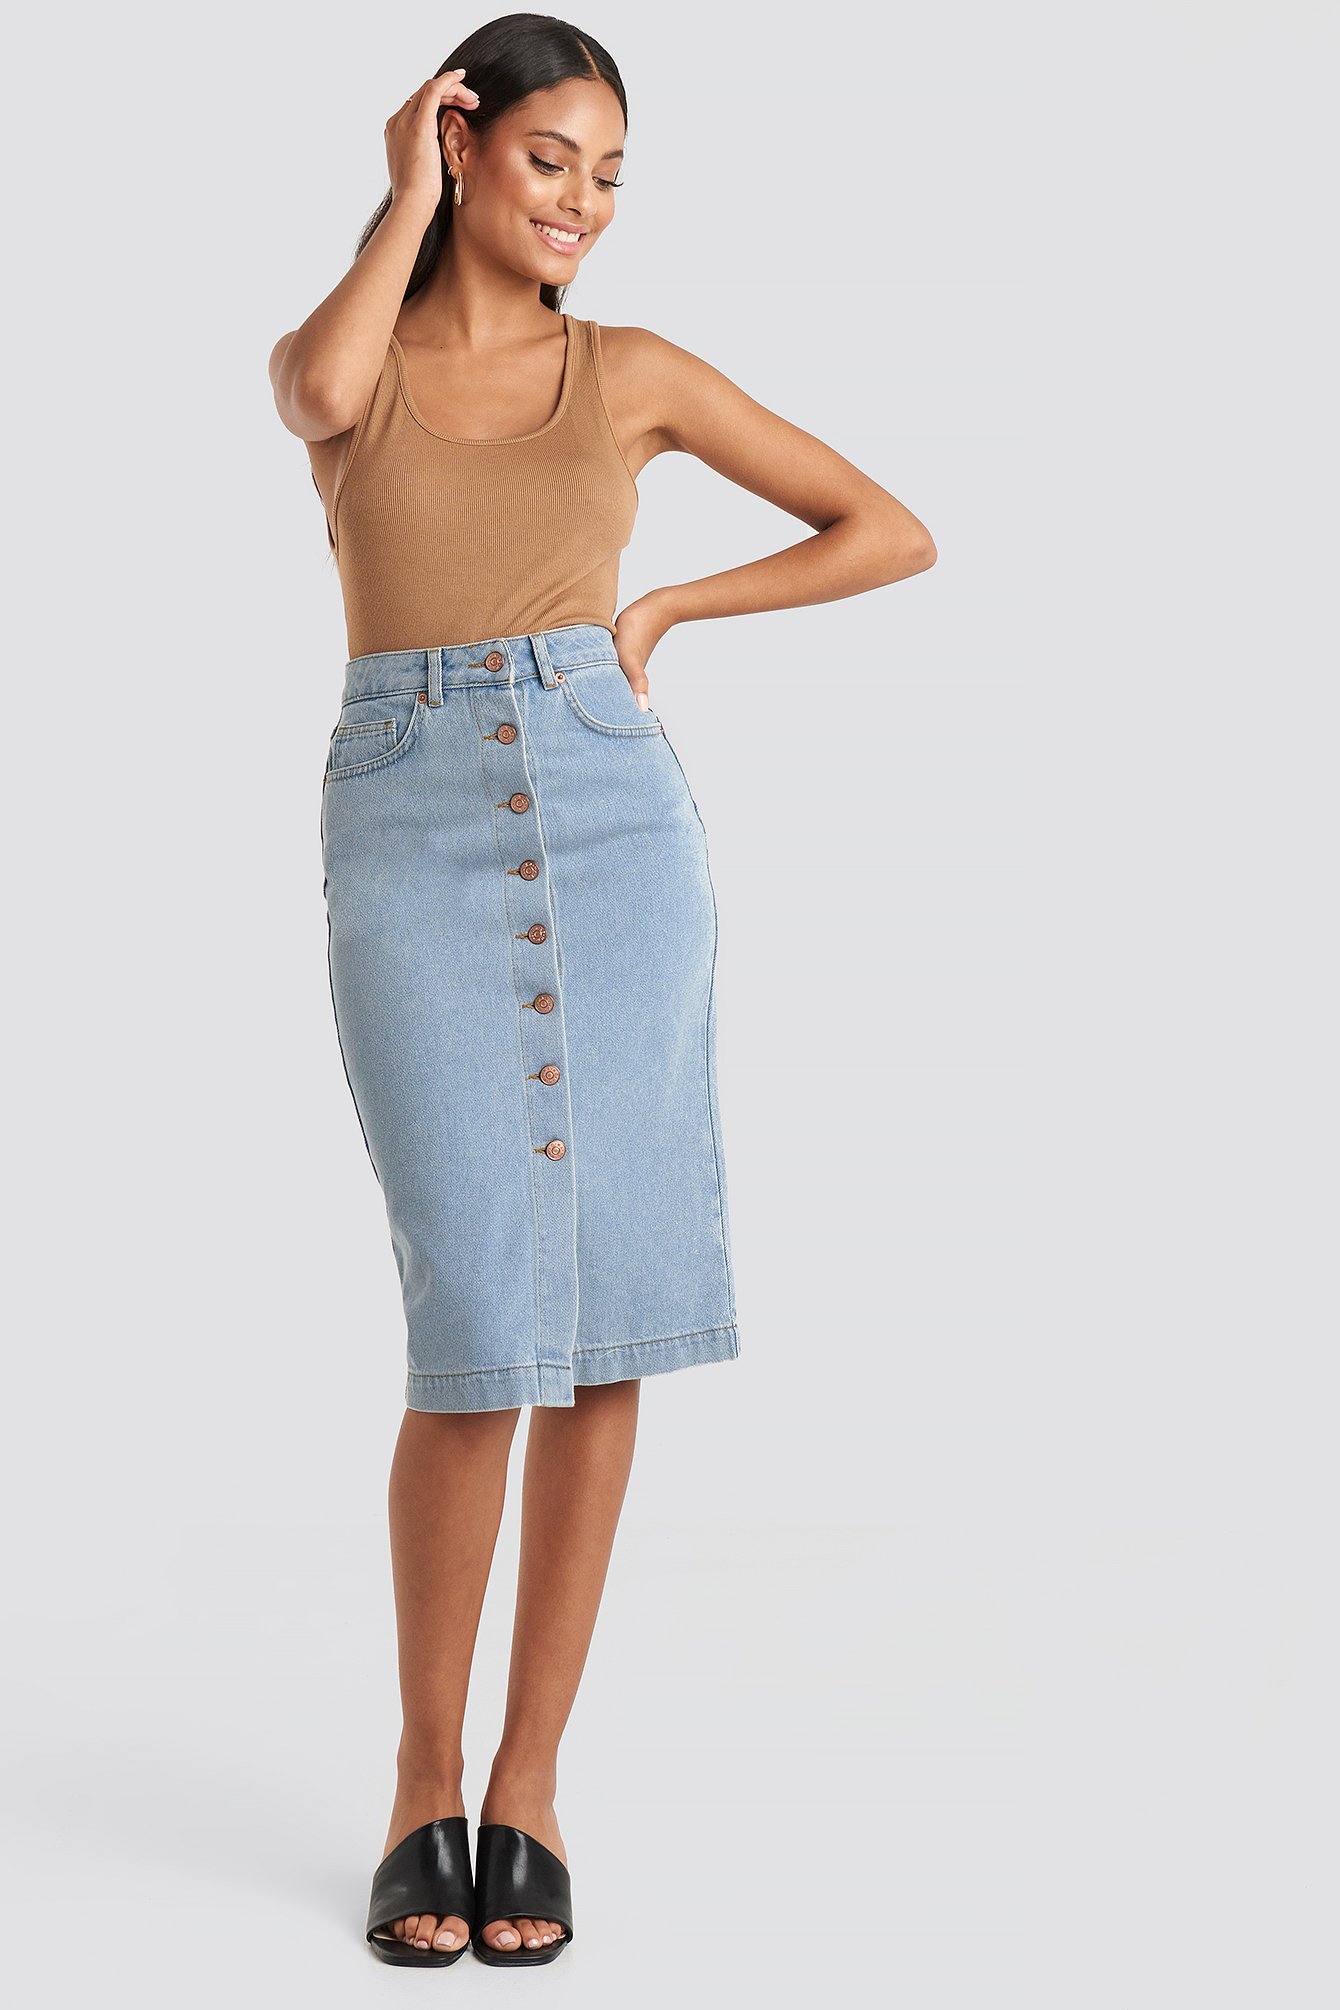 Everlane Skirt The Denim Button-Front Pencil Skirt Button Fly Size 31 | eBay